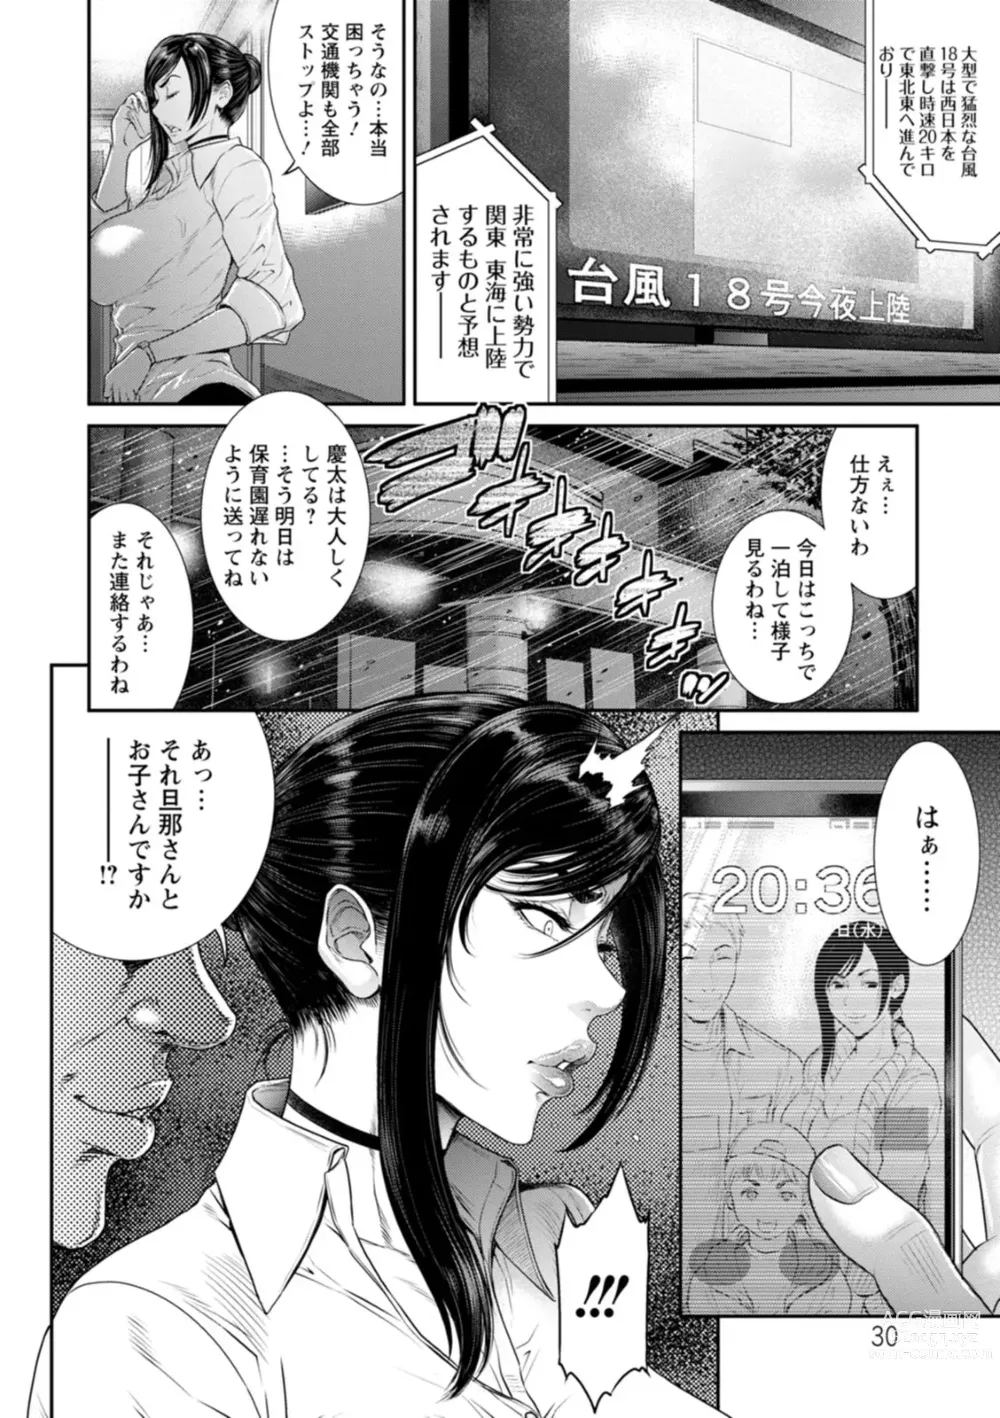 Page 30 of manga Obscene Box